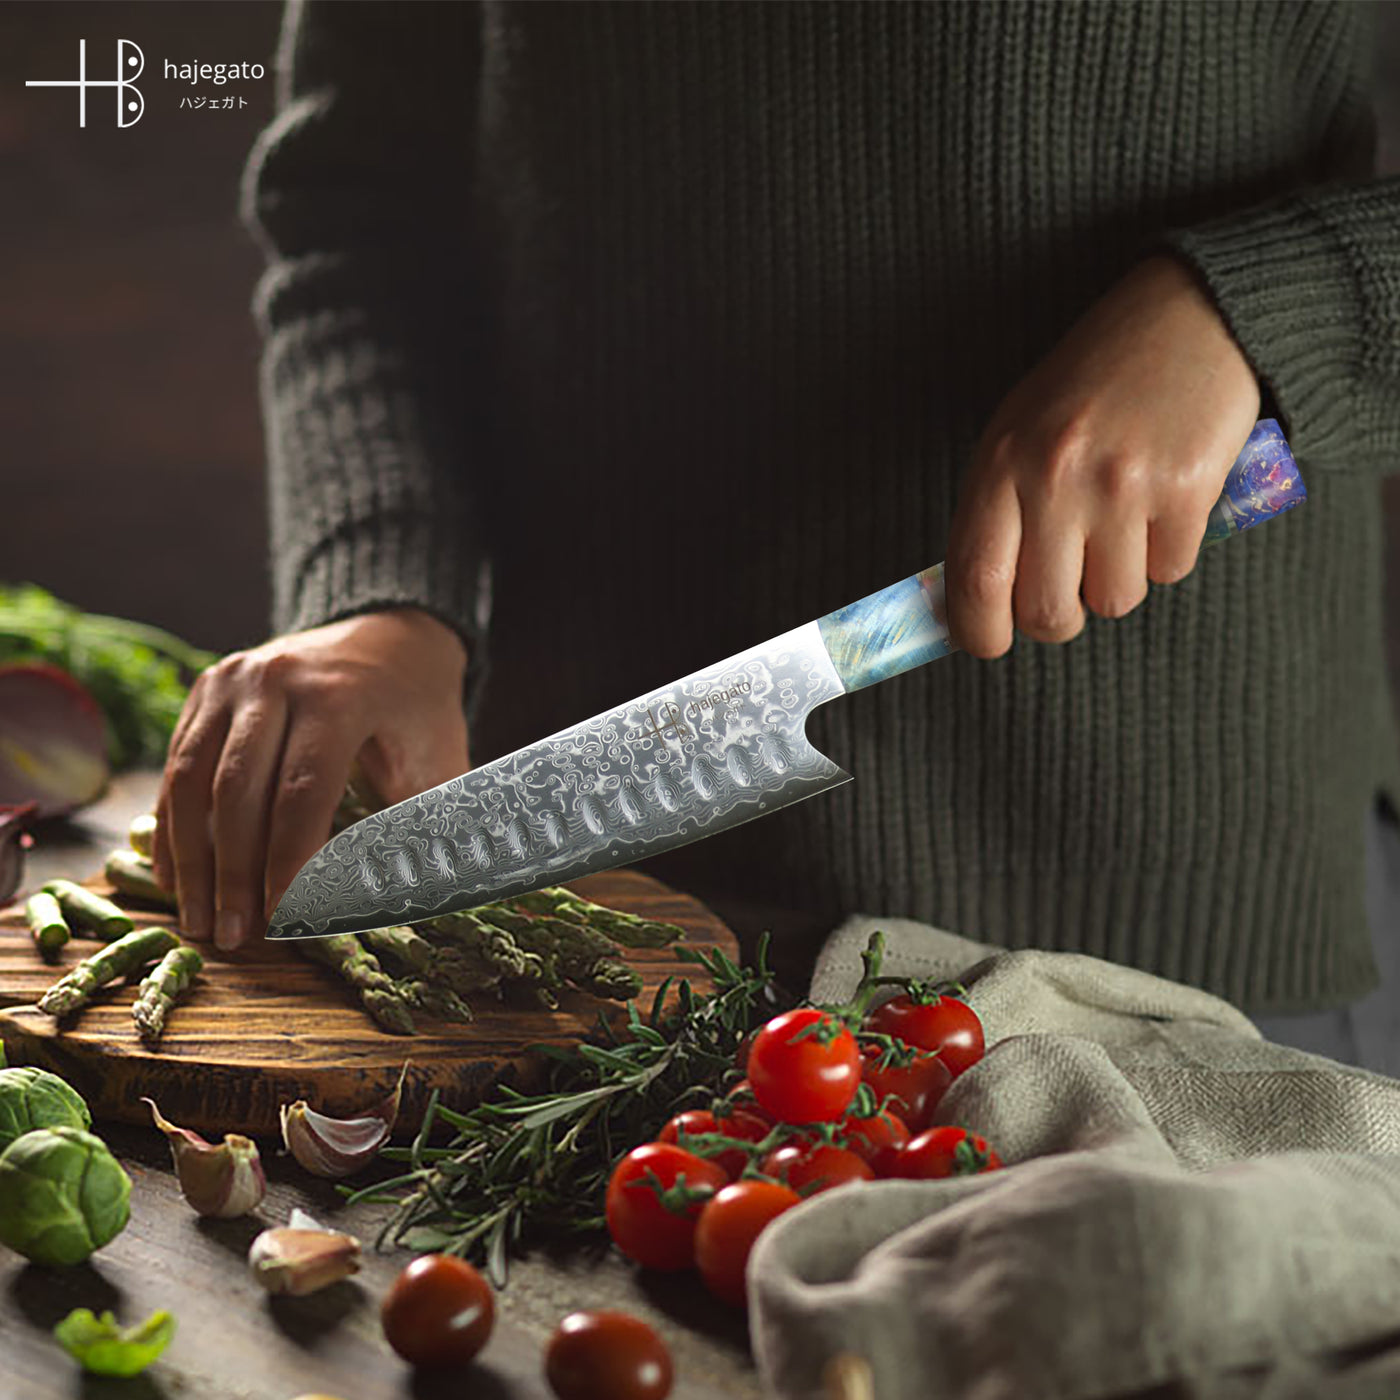 Professional Handmade 7 Chef Knife - eXo Blue